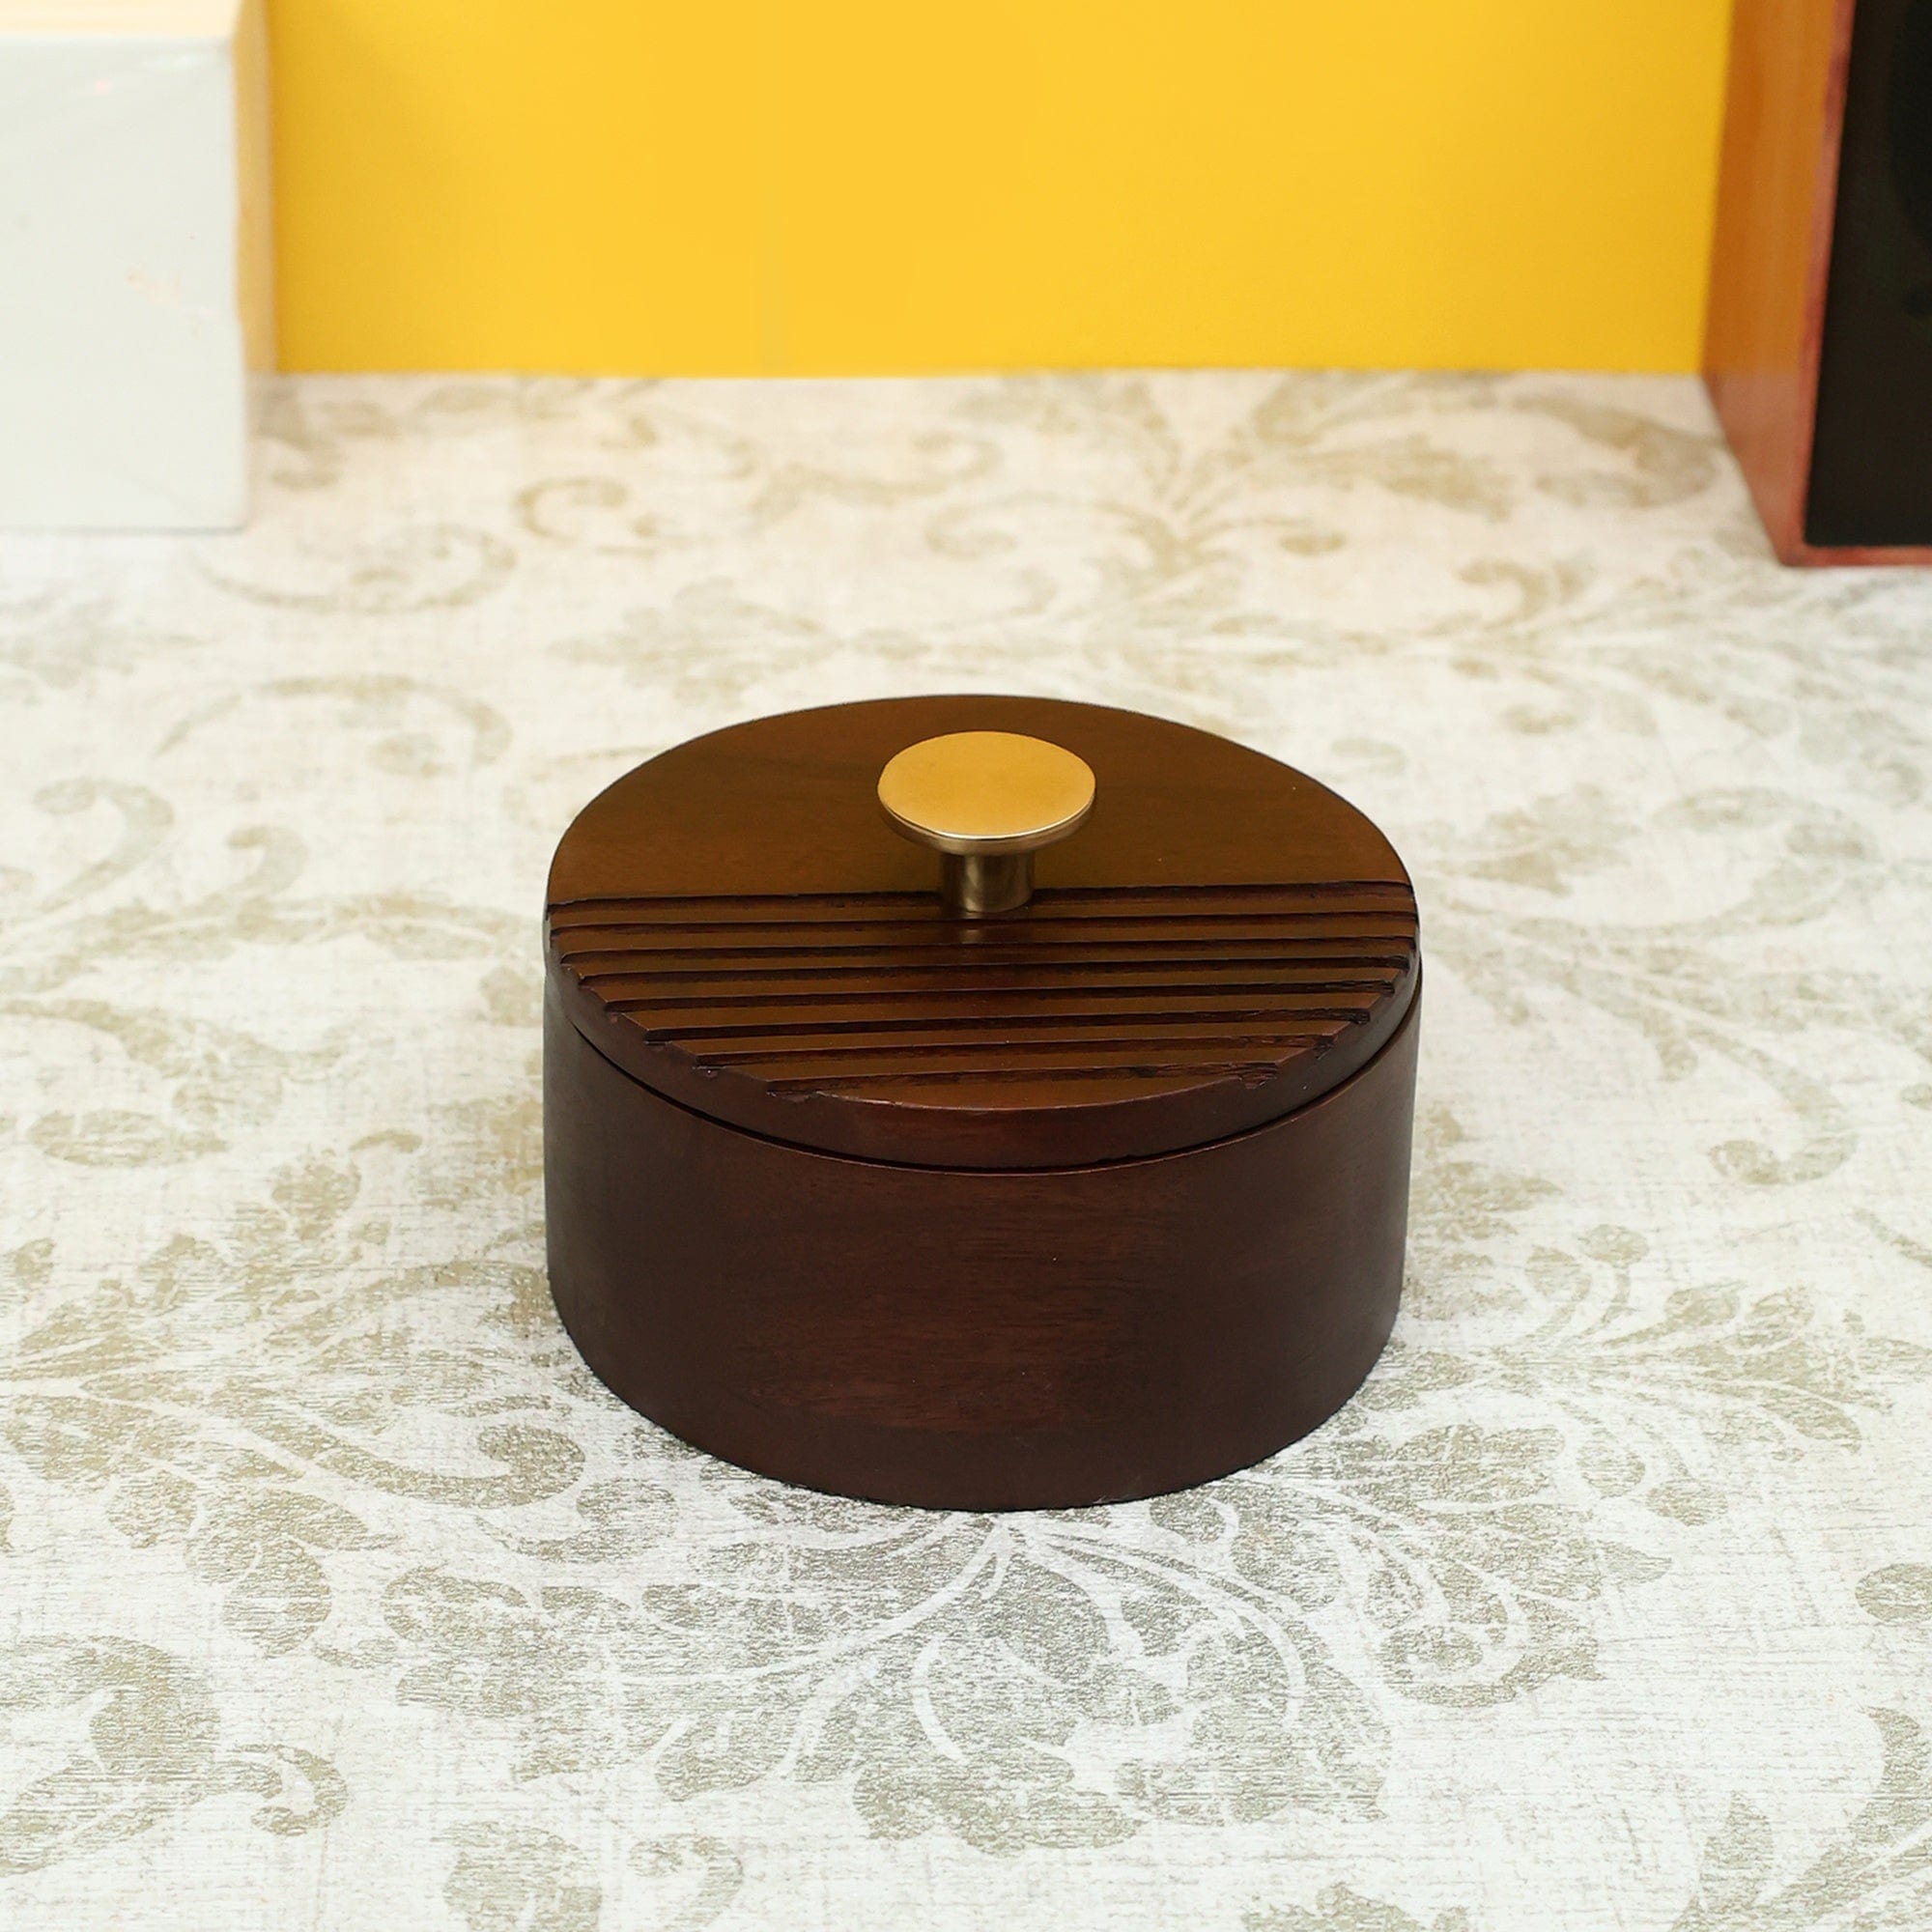 The Artisan's Stripes- Trinket Small Brown Box